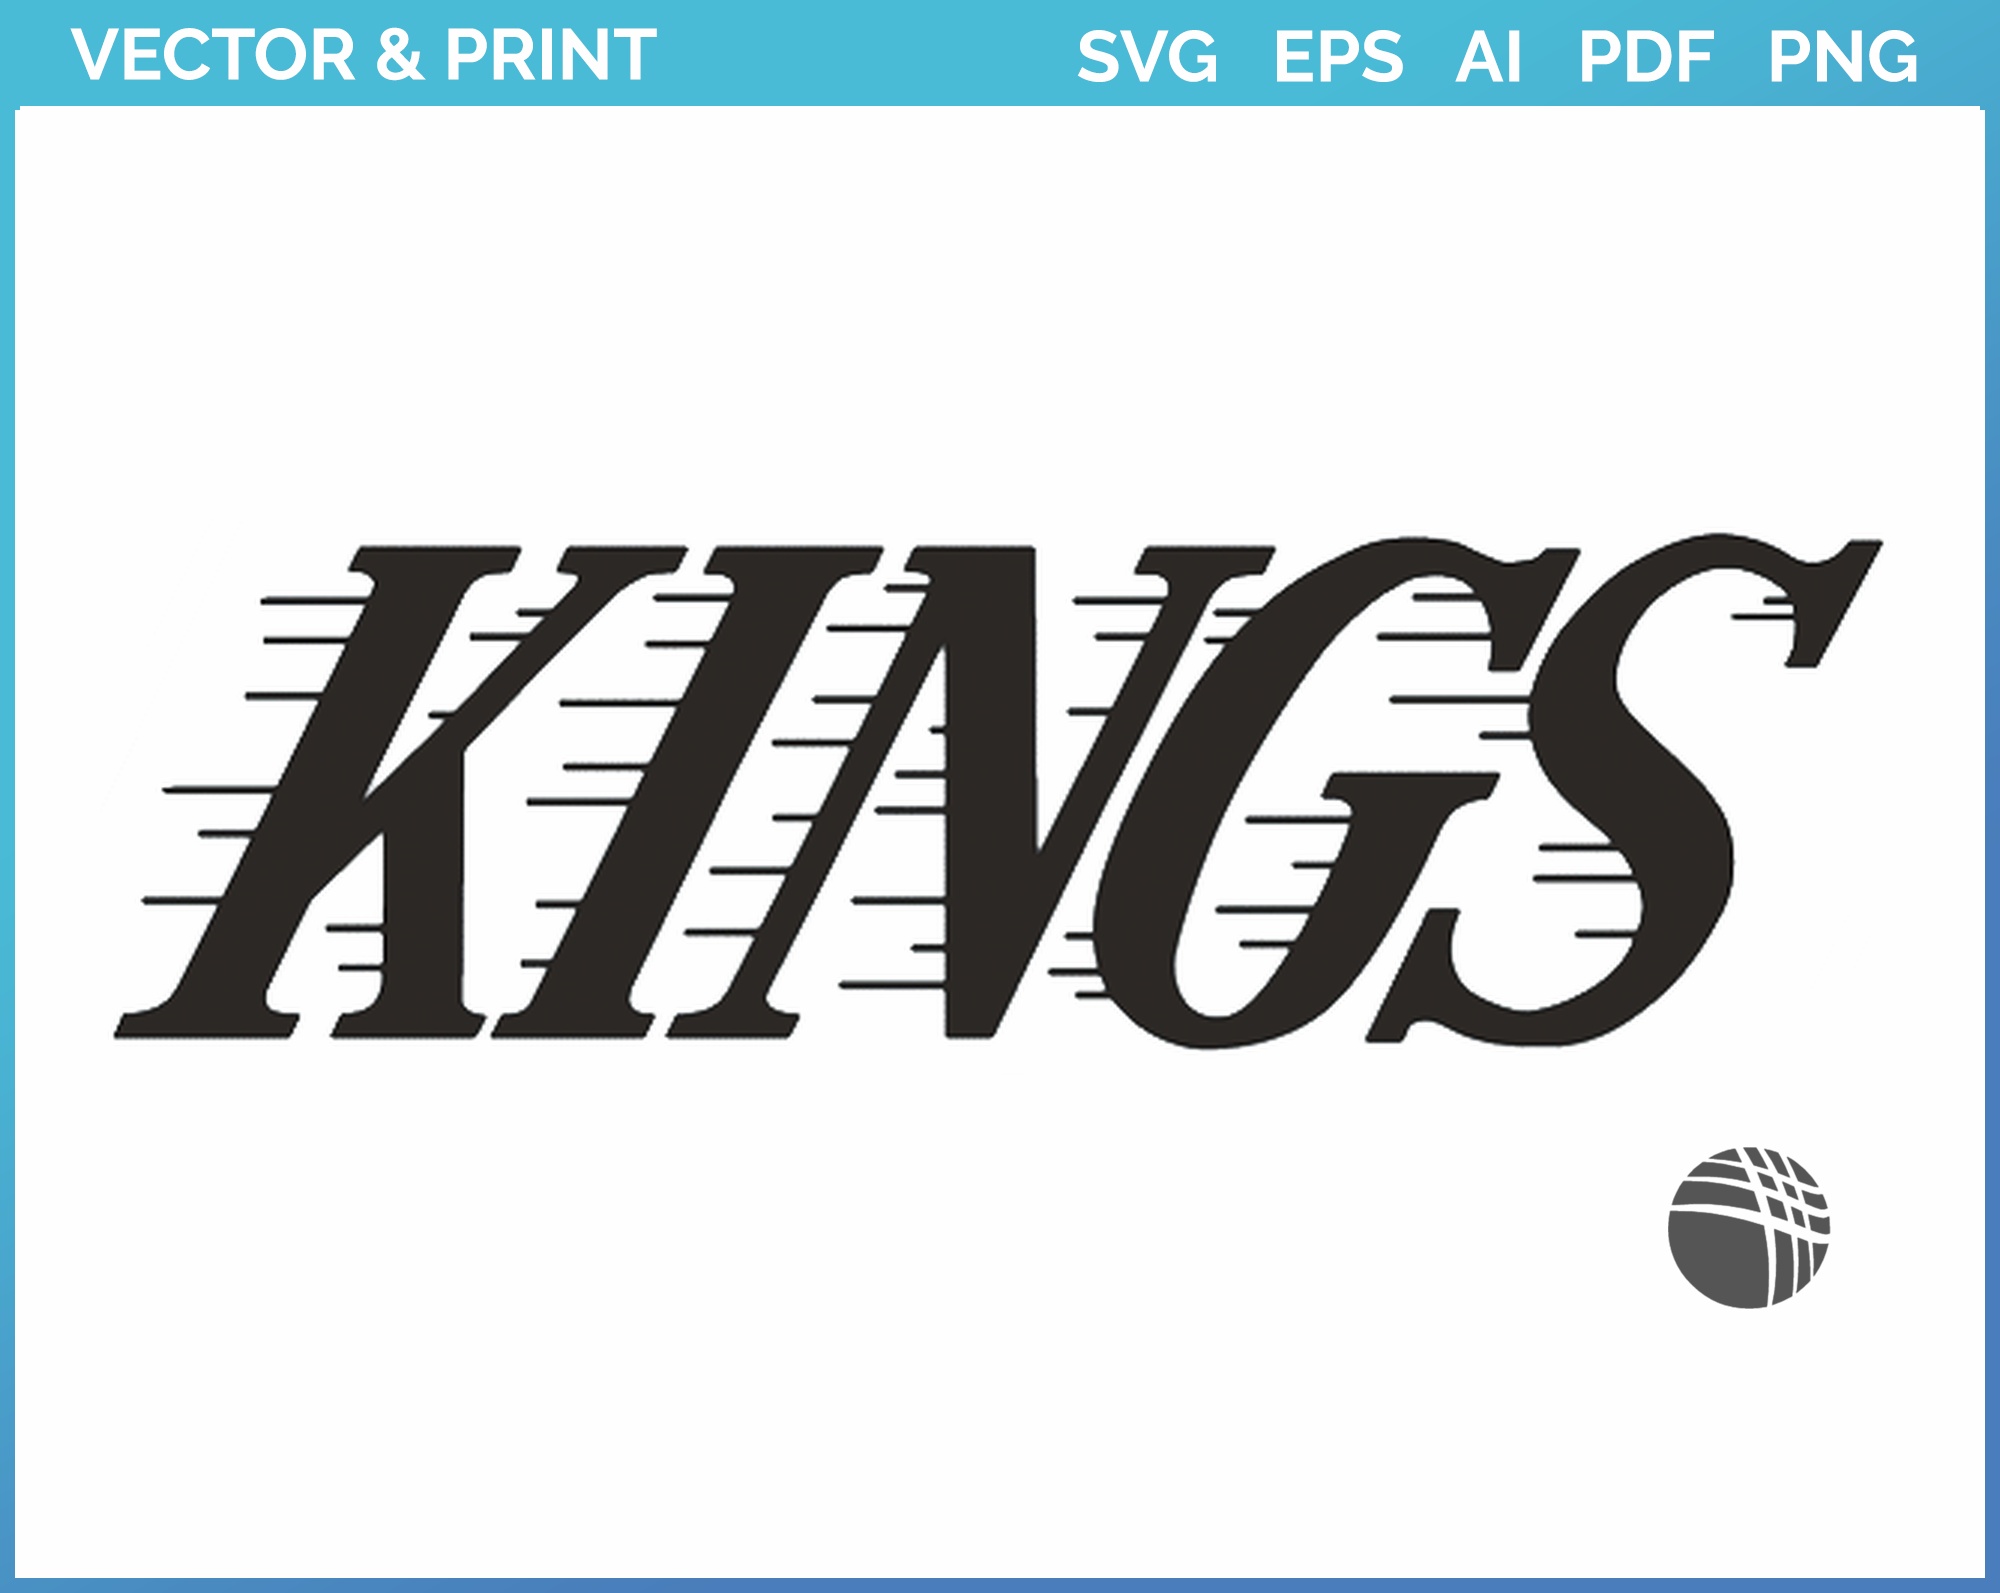 Los Angeles Kings Svg NHL National Hockey League Team Svg Logo